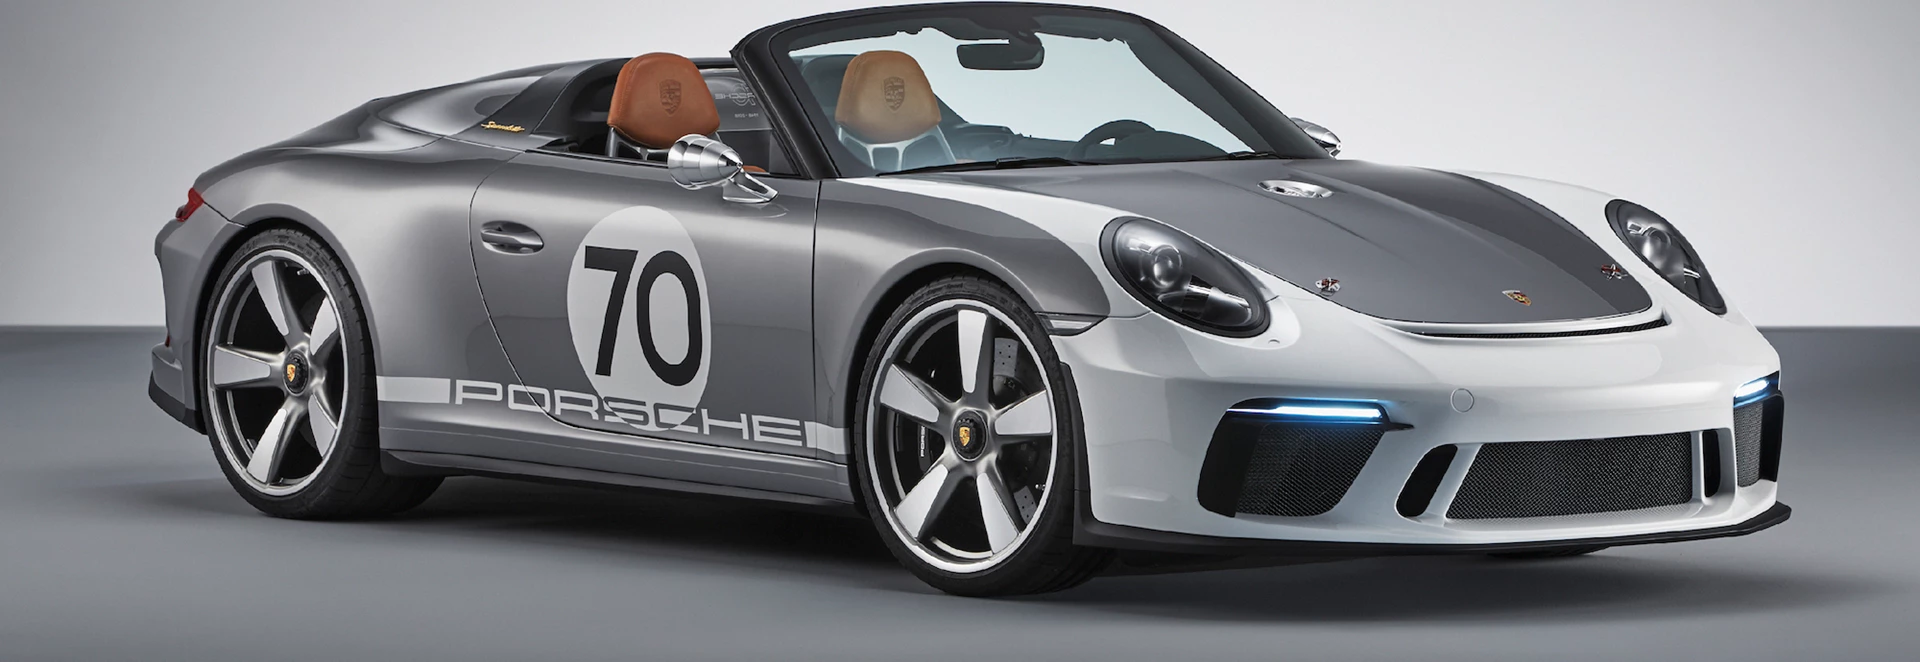 This is the new Porsche 911 Speedster Concept